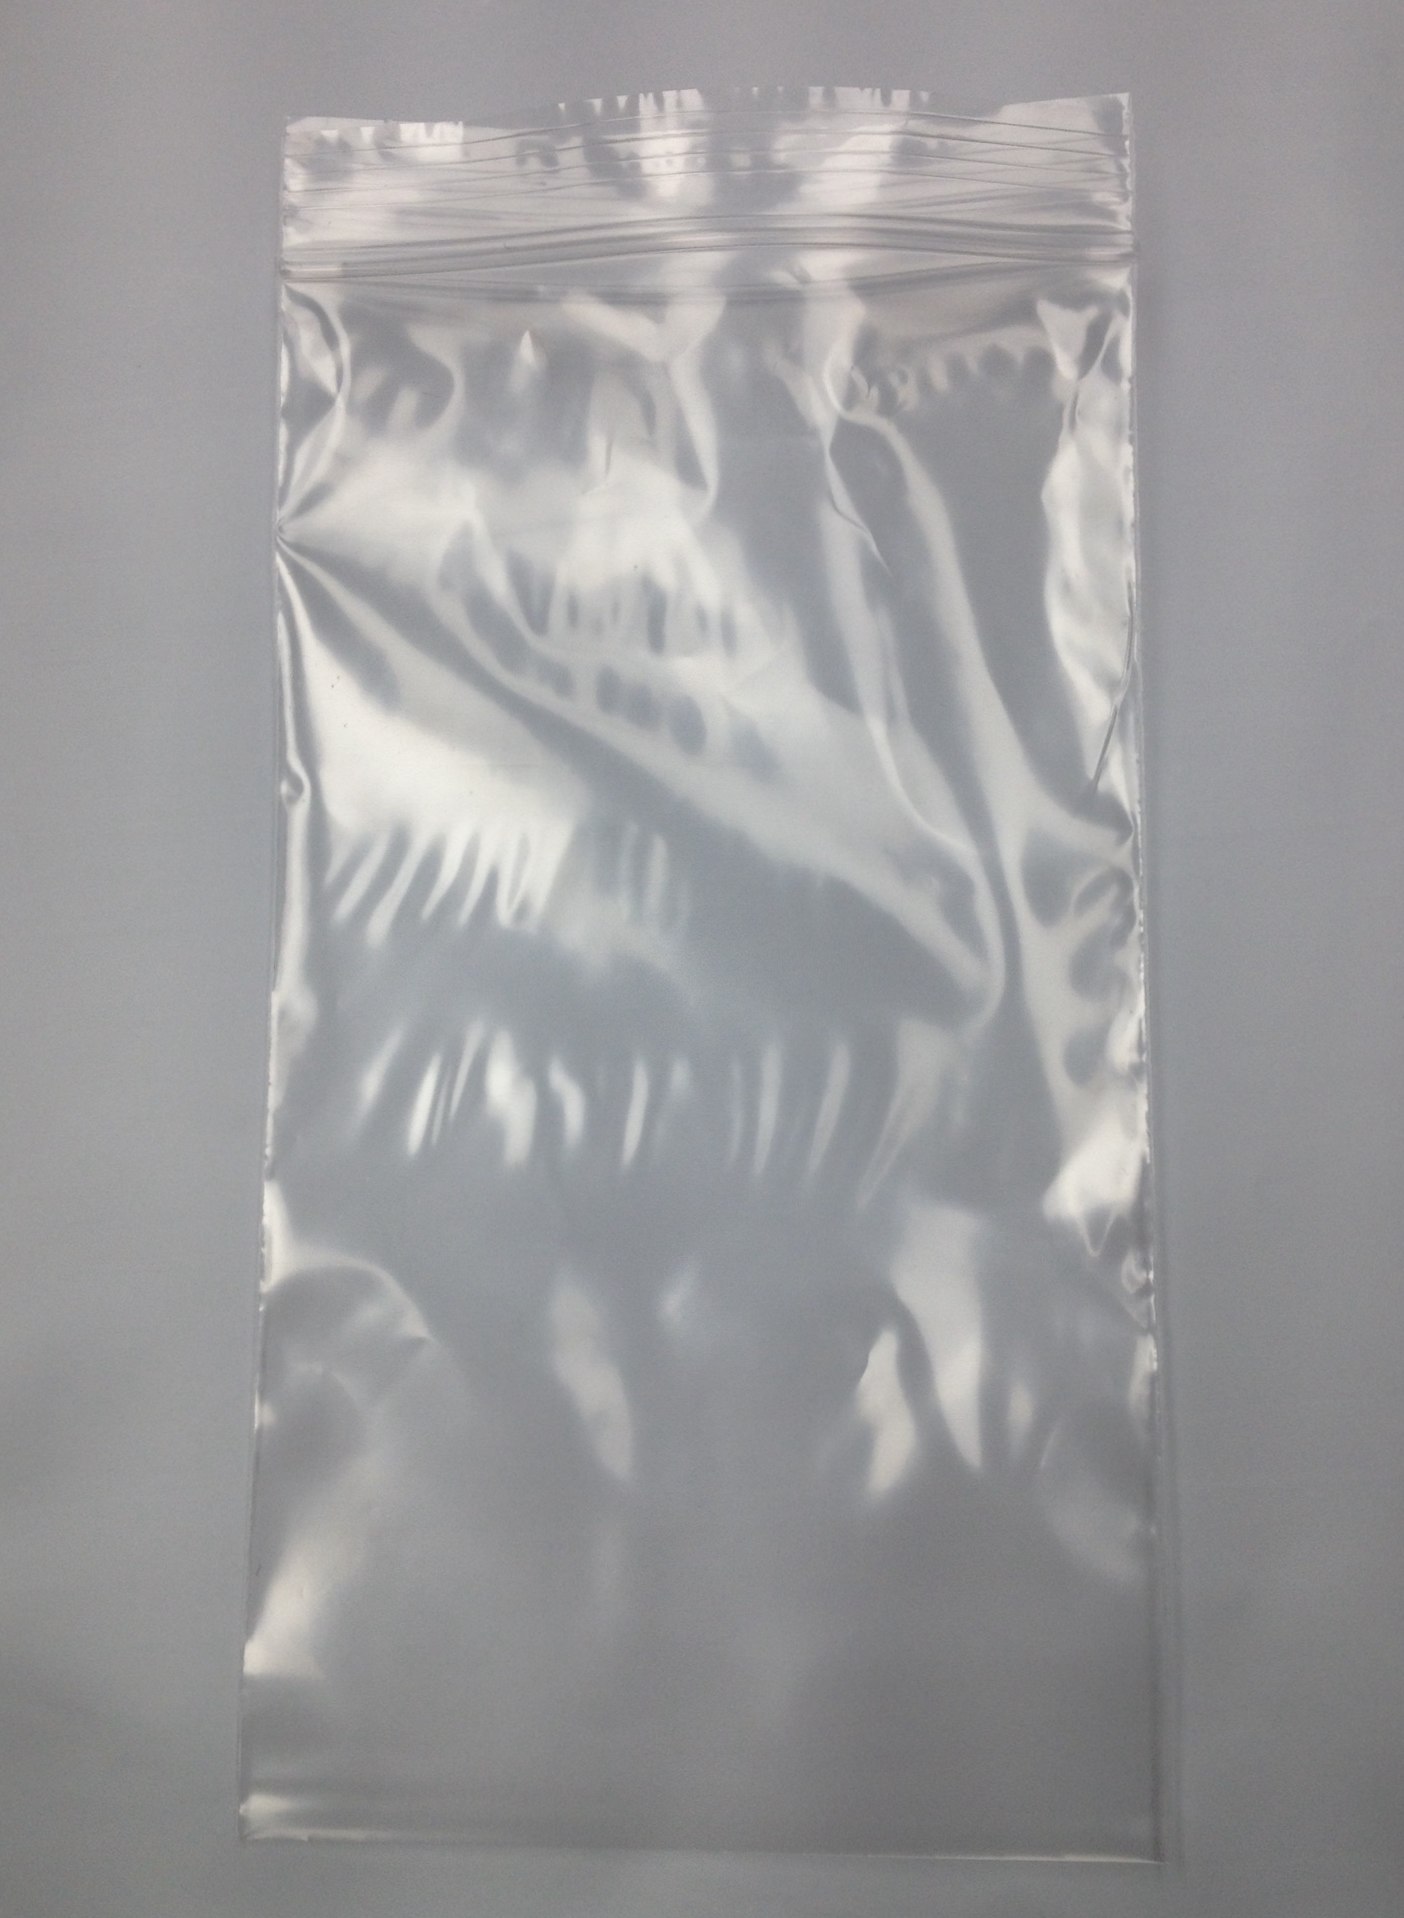 1 SAMPLE 3x8 Ziplock Reclosable Resealable Clear Plastic Bags 2Mil 3" x 8" 